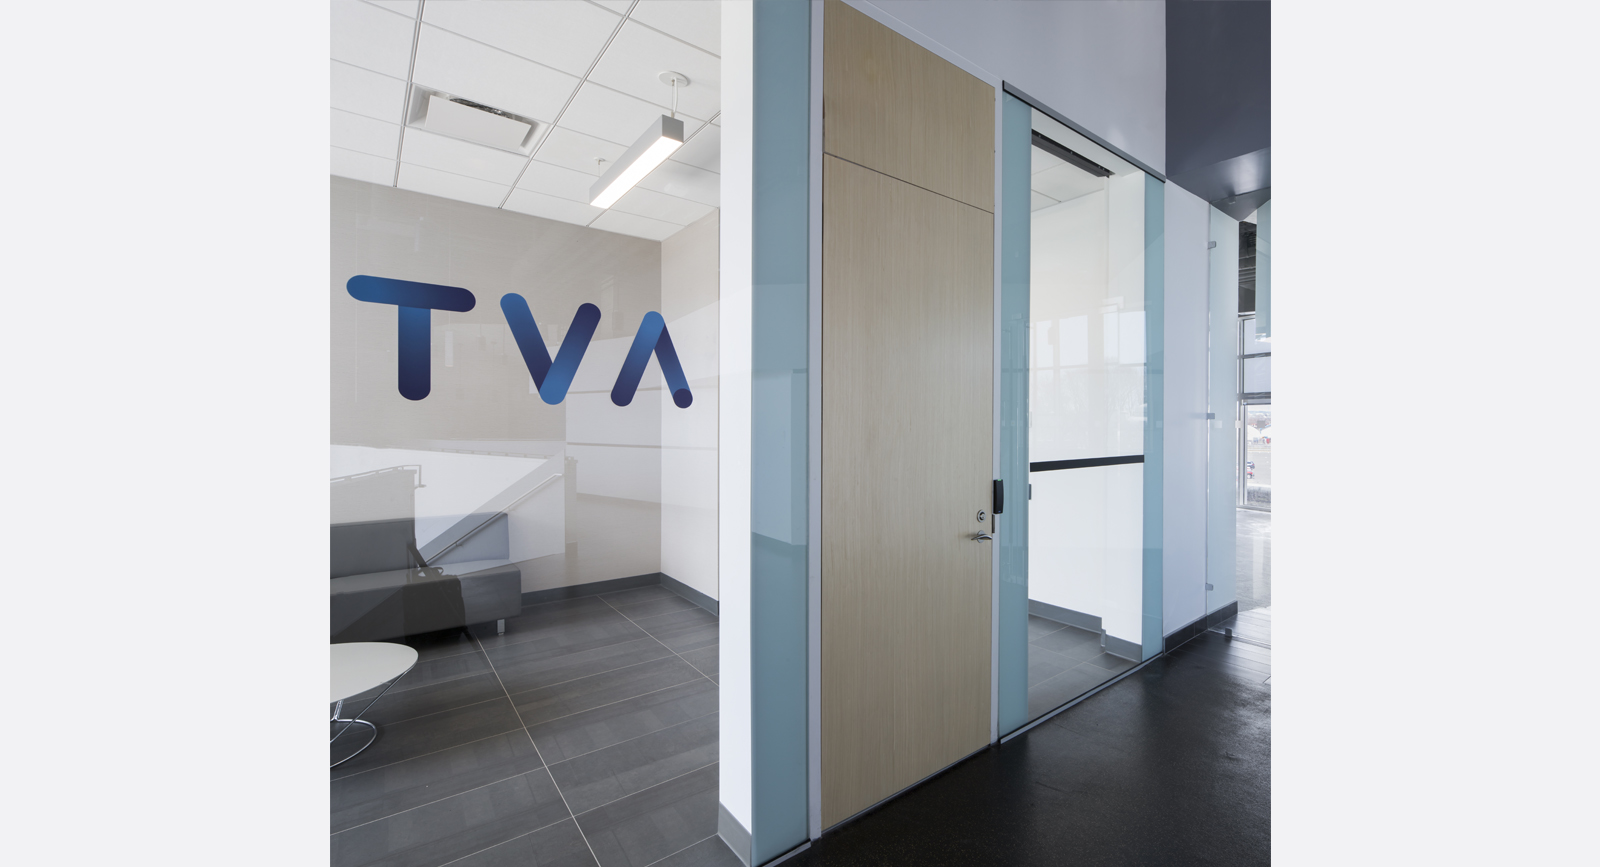 TVA Studios